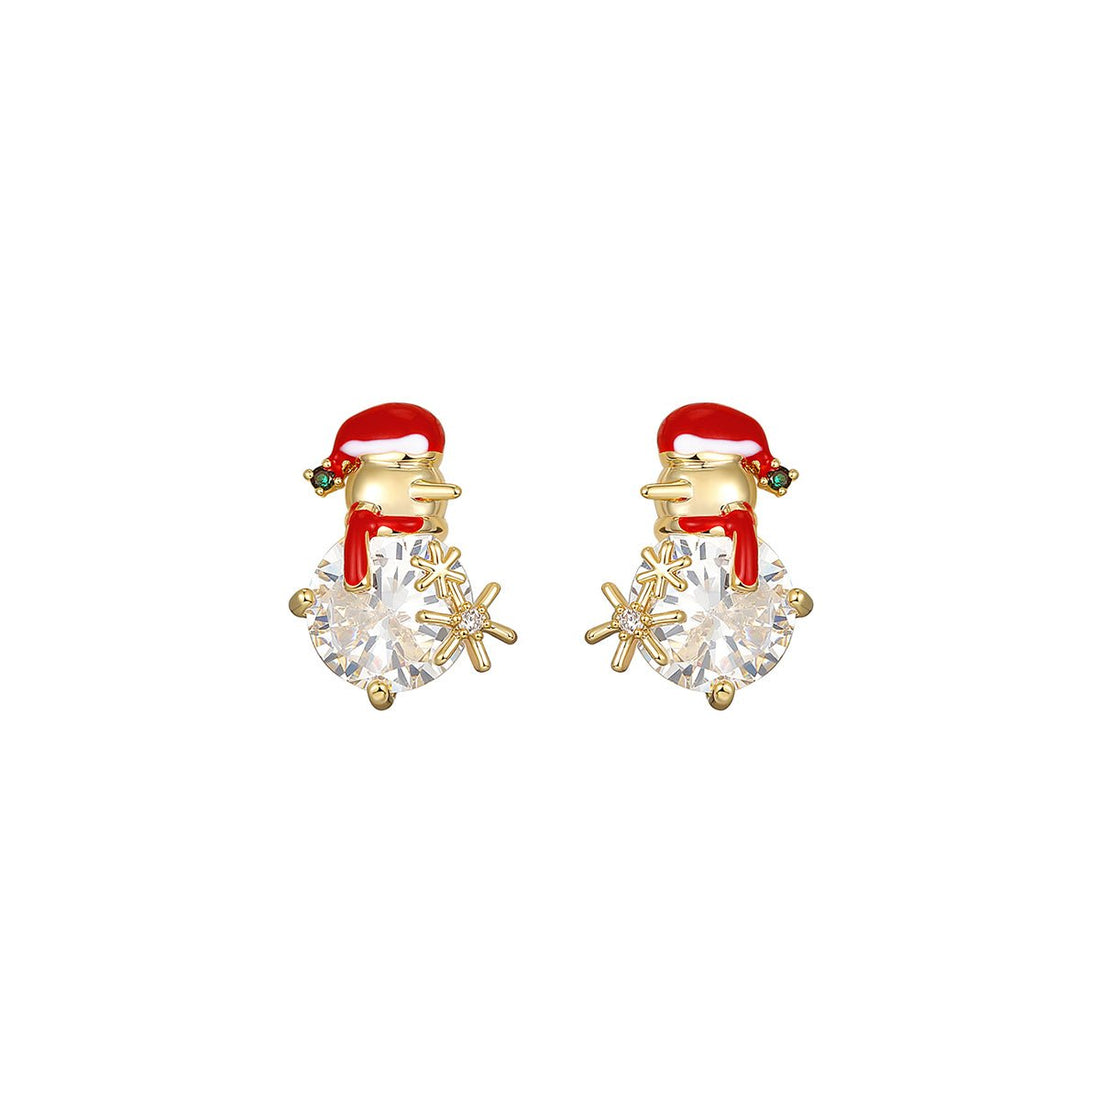 Christmas Snowman Gold Earrings - 0cm